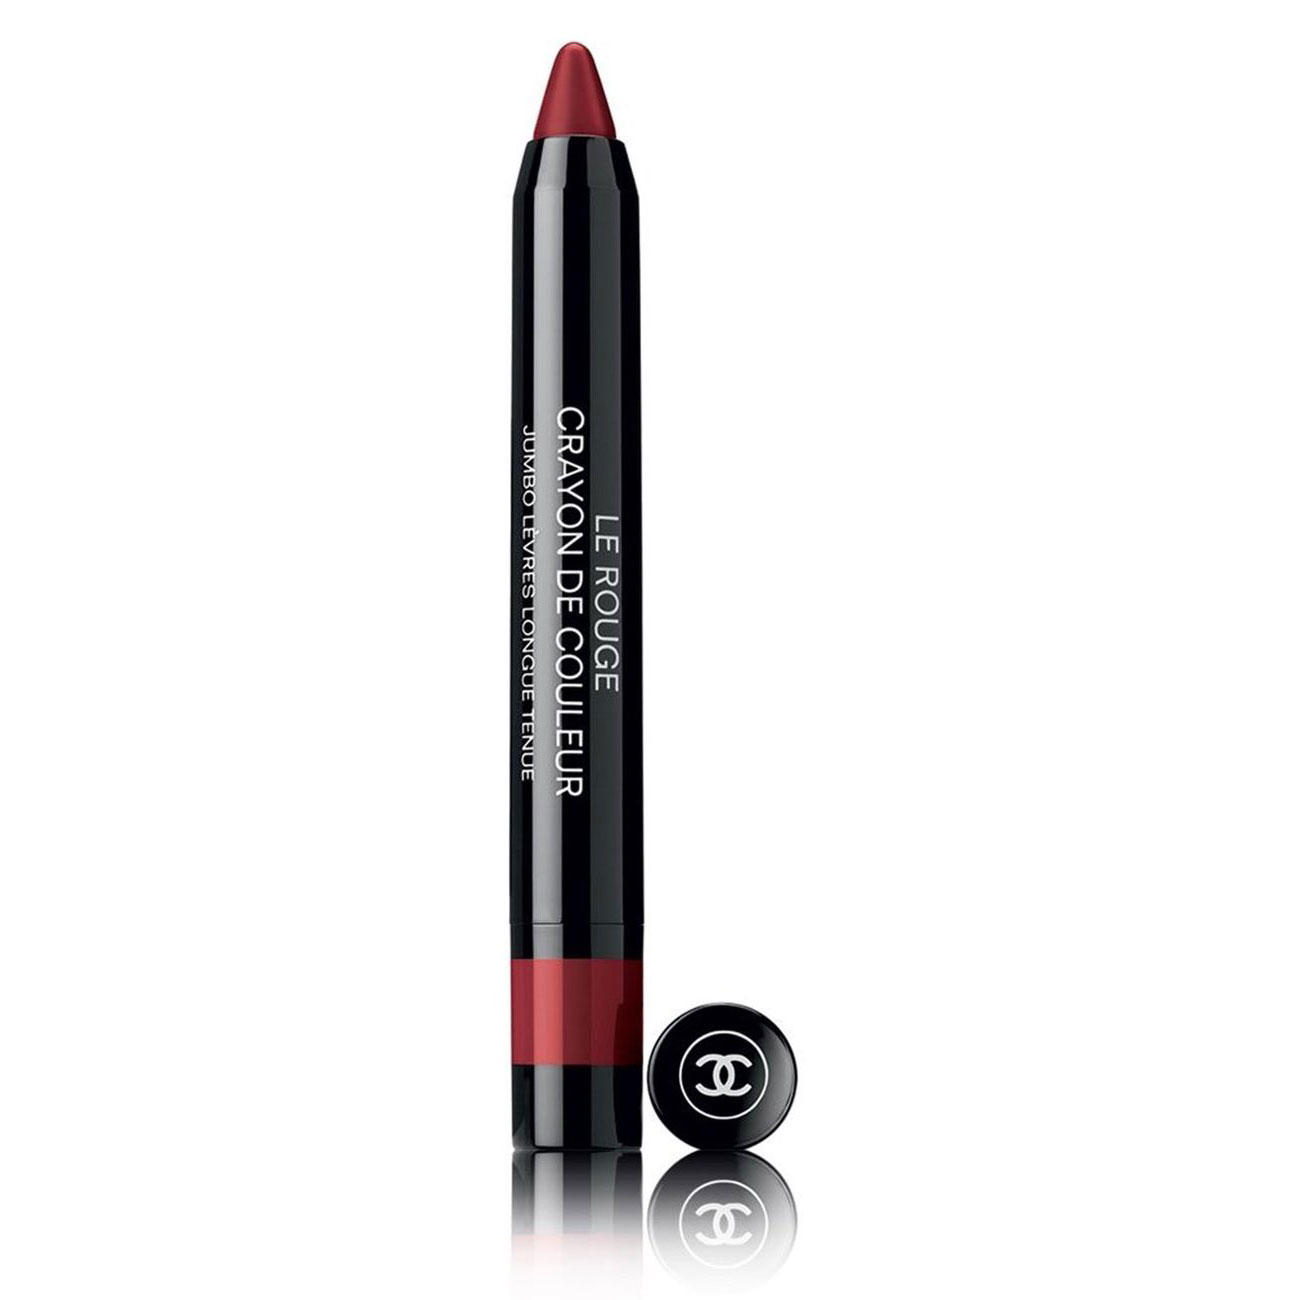 Chanel Jumbo Longwear Lip Crayon Carmin No. 12